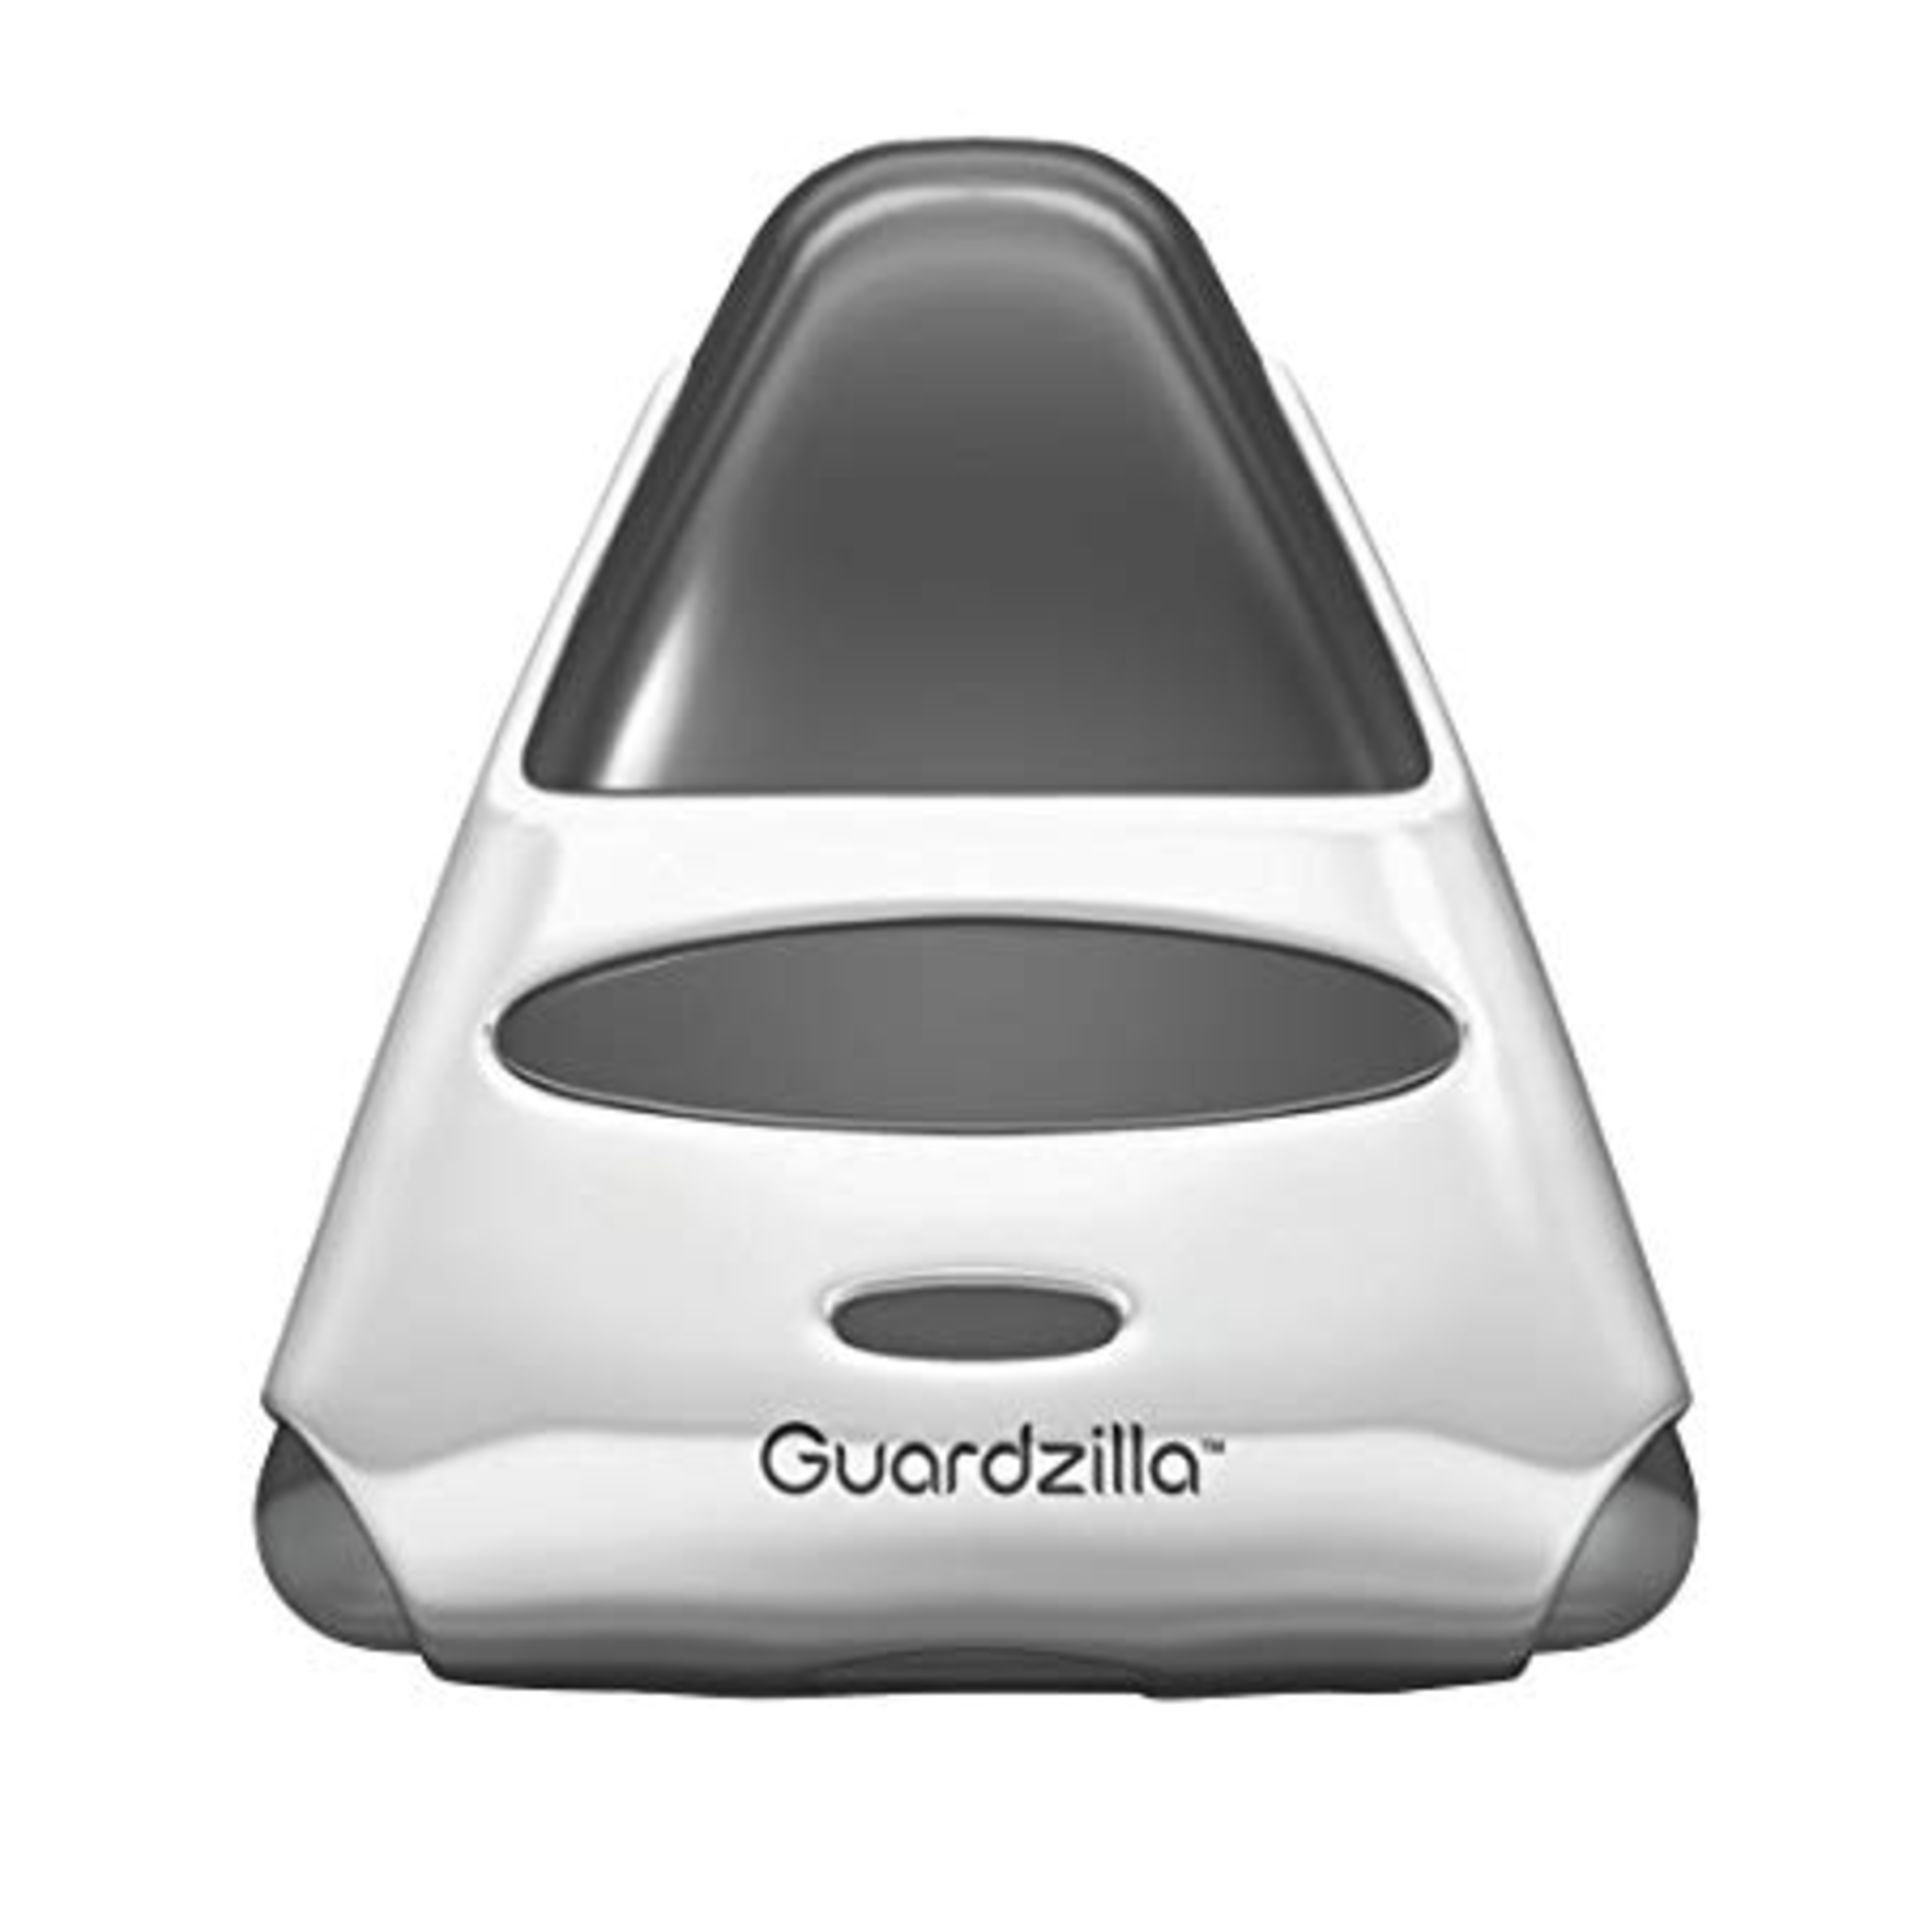 V Brand New Guardzilla All-In-One HD Security System Including Camera + Siren + Smartphone Remote